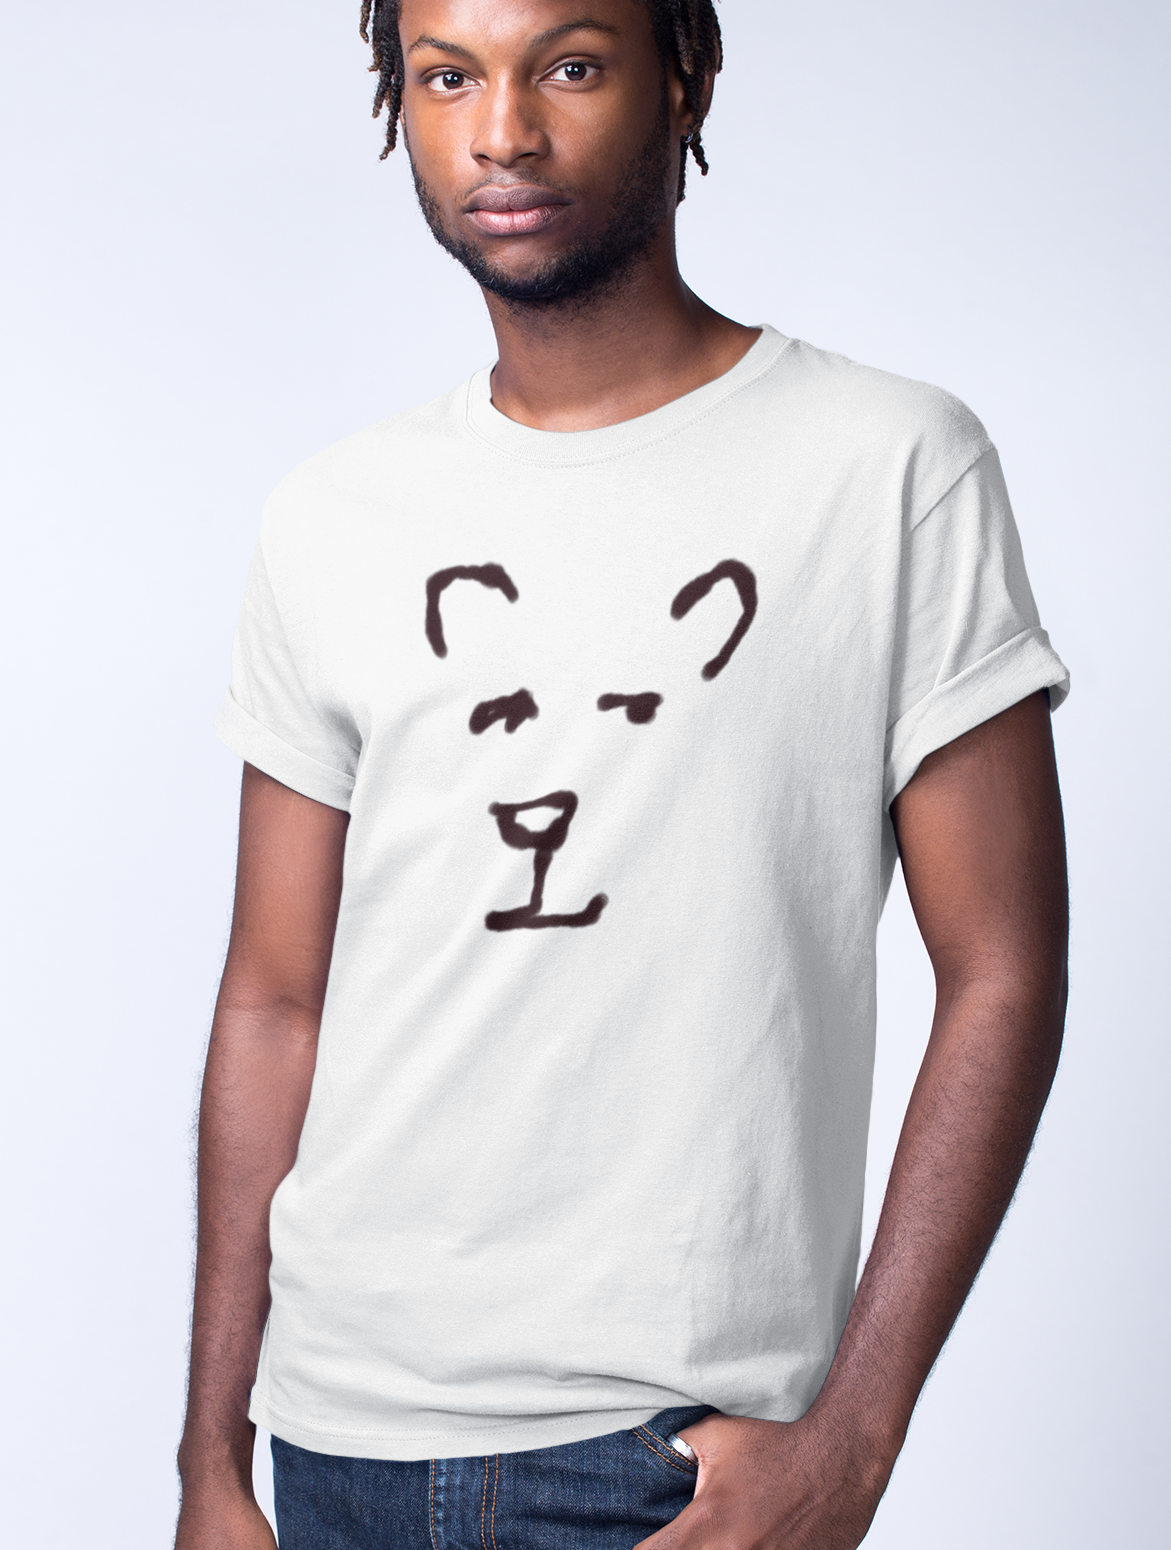 Polar Bear T-shirt - Young man wearing an illustrated Bear vegan cotton t-shirt by Hector and Bone